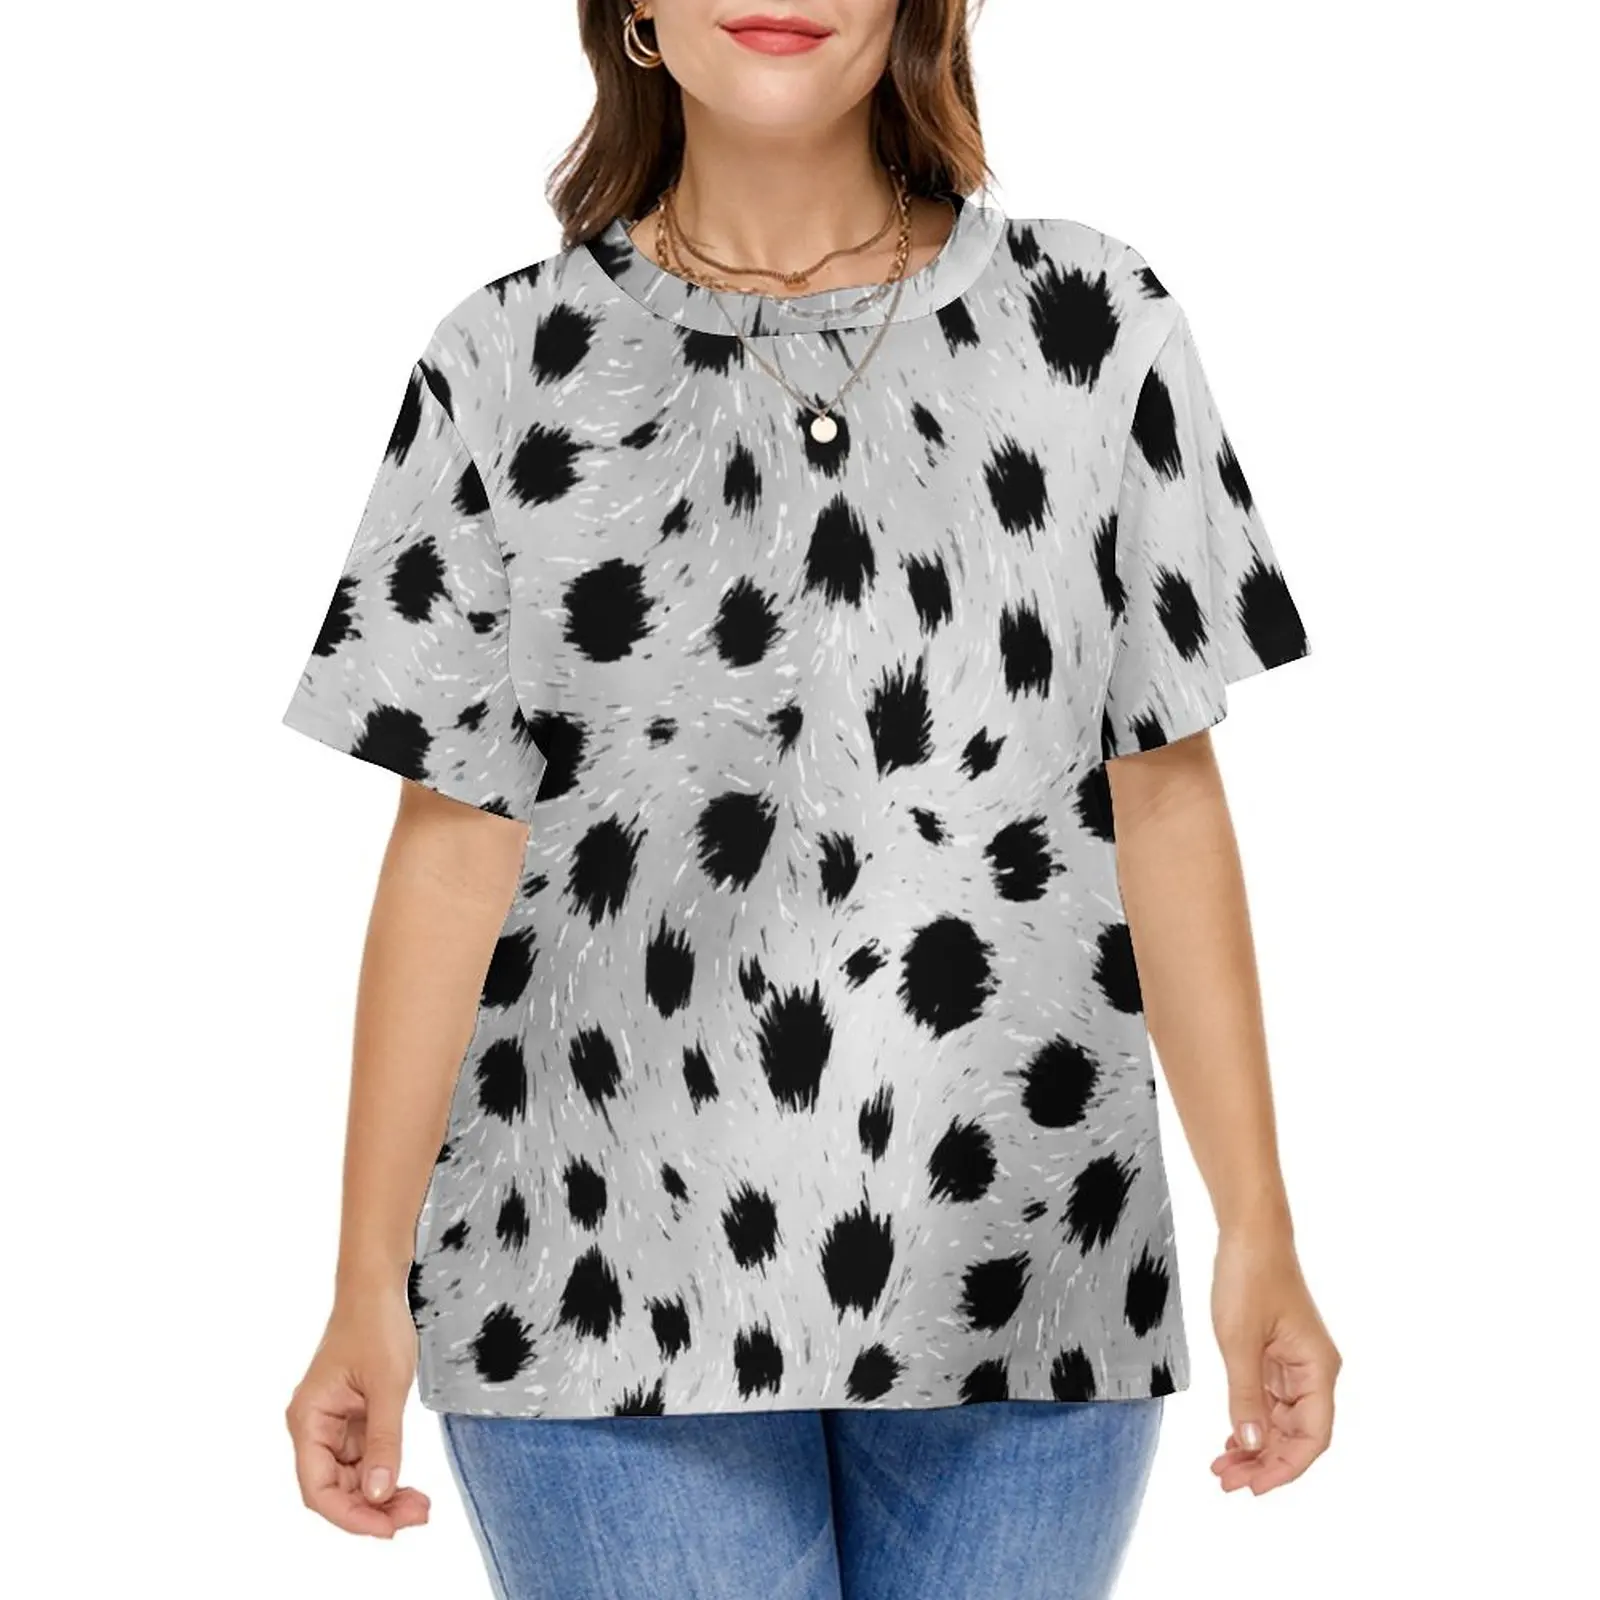 Dalmatian Spots Print T Shirt Black and White Pretty T-Shirts Short Sleeve Street Fashion Tshirt Summer Clothes Plus Size 5XL